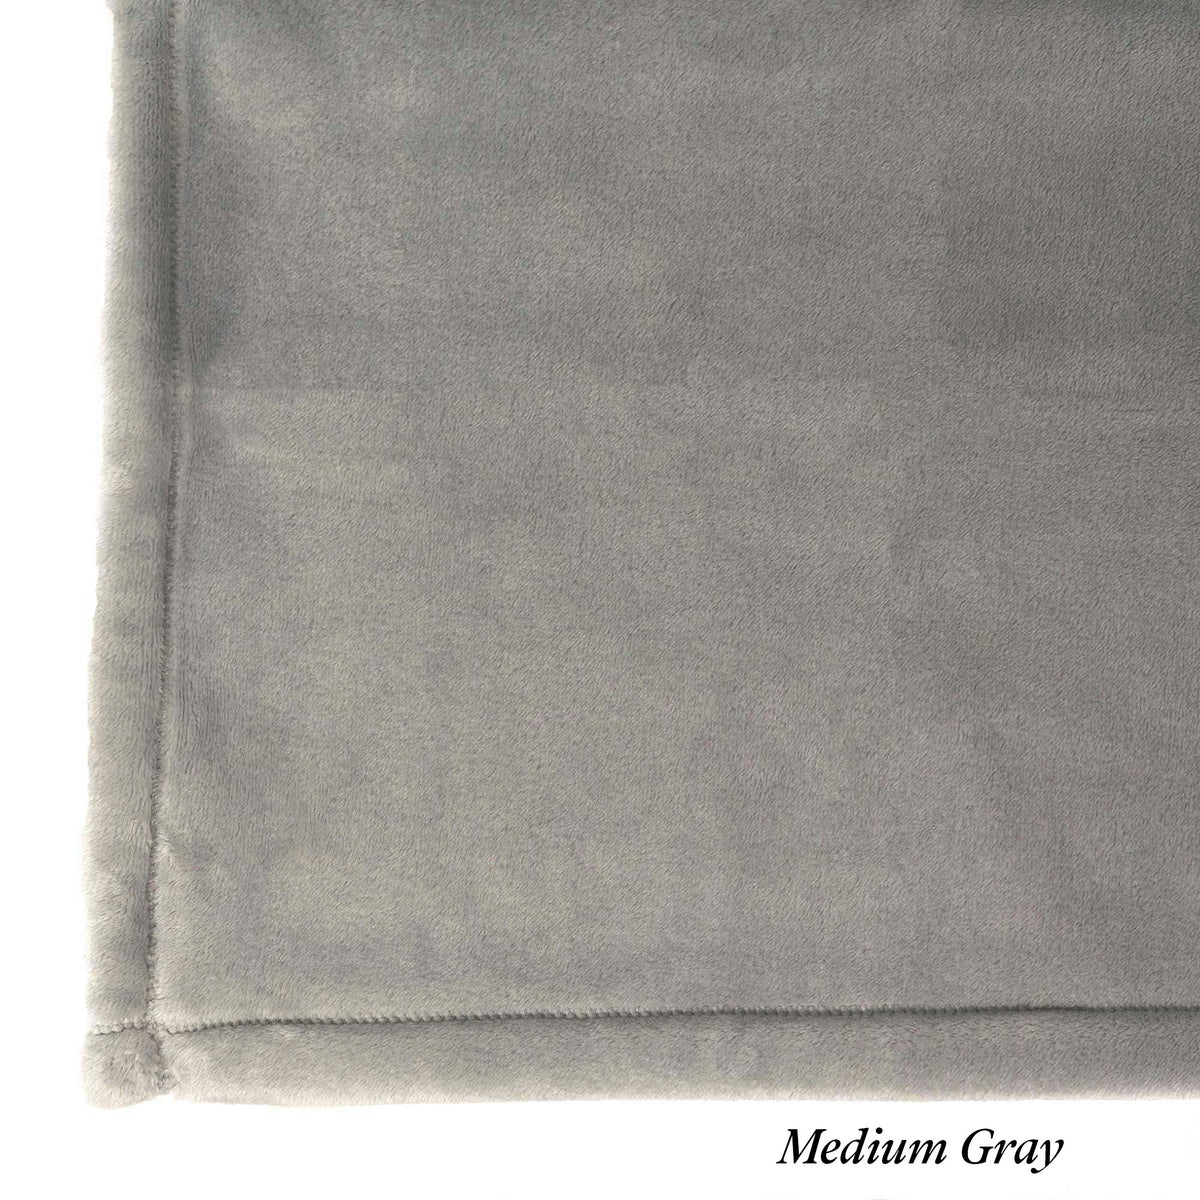 Medium Gray - The Best Fleece Blankets - Custom Size Luster Loft Fleece Blankets - American Blanket Company